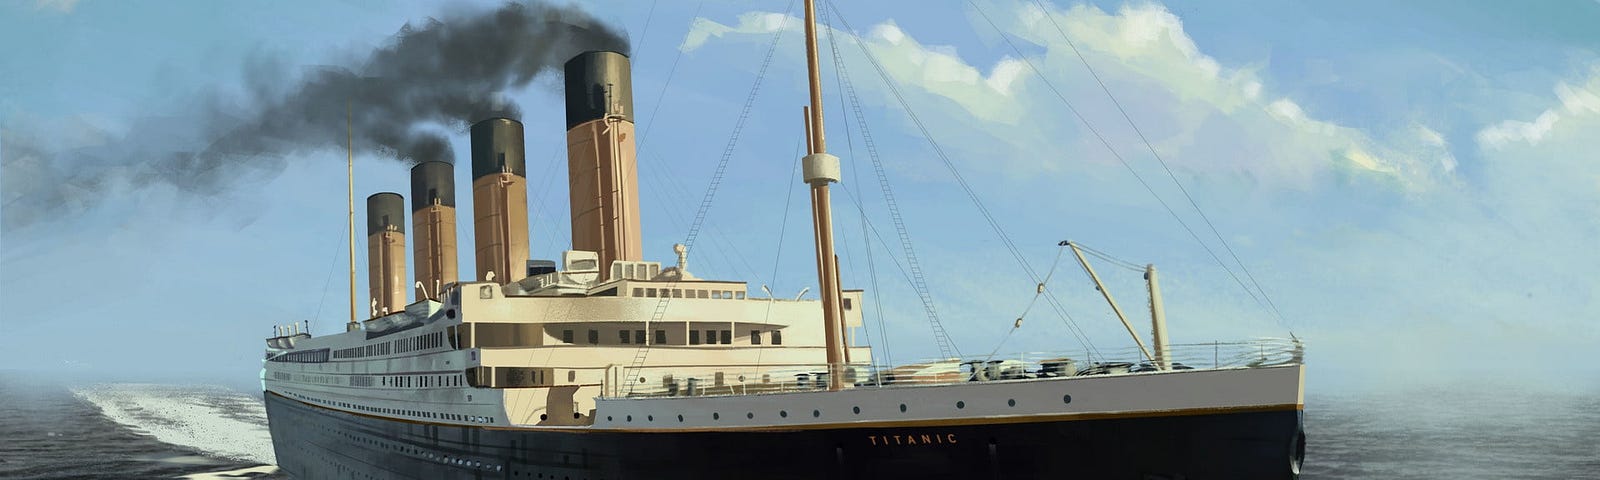 RMS Titanic.